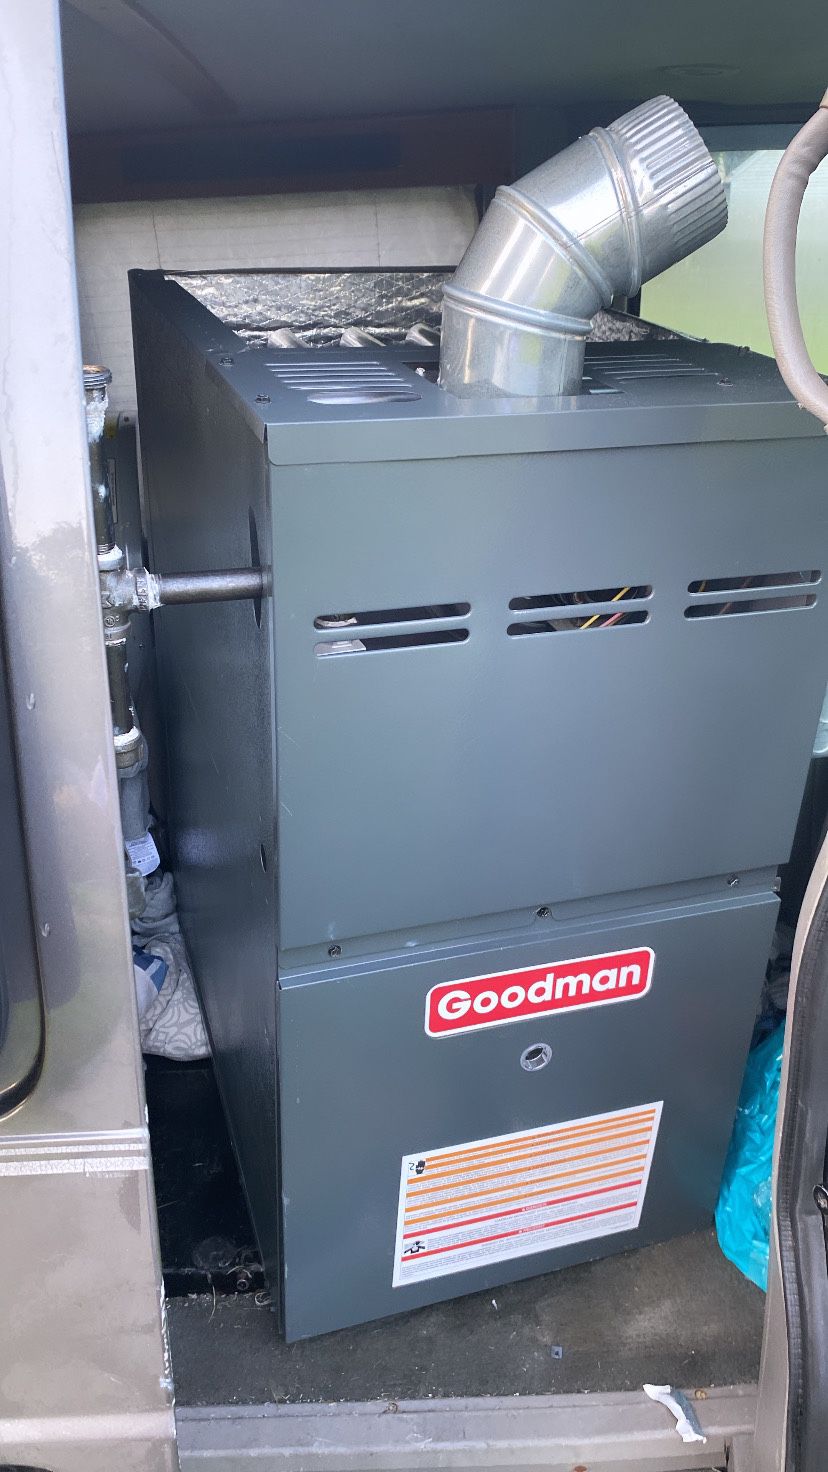 Goodman Furnace And Gas Hot Water Tank 